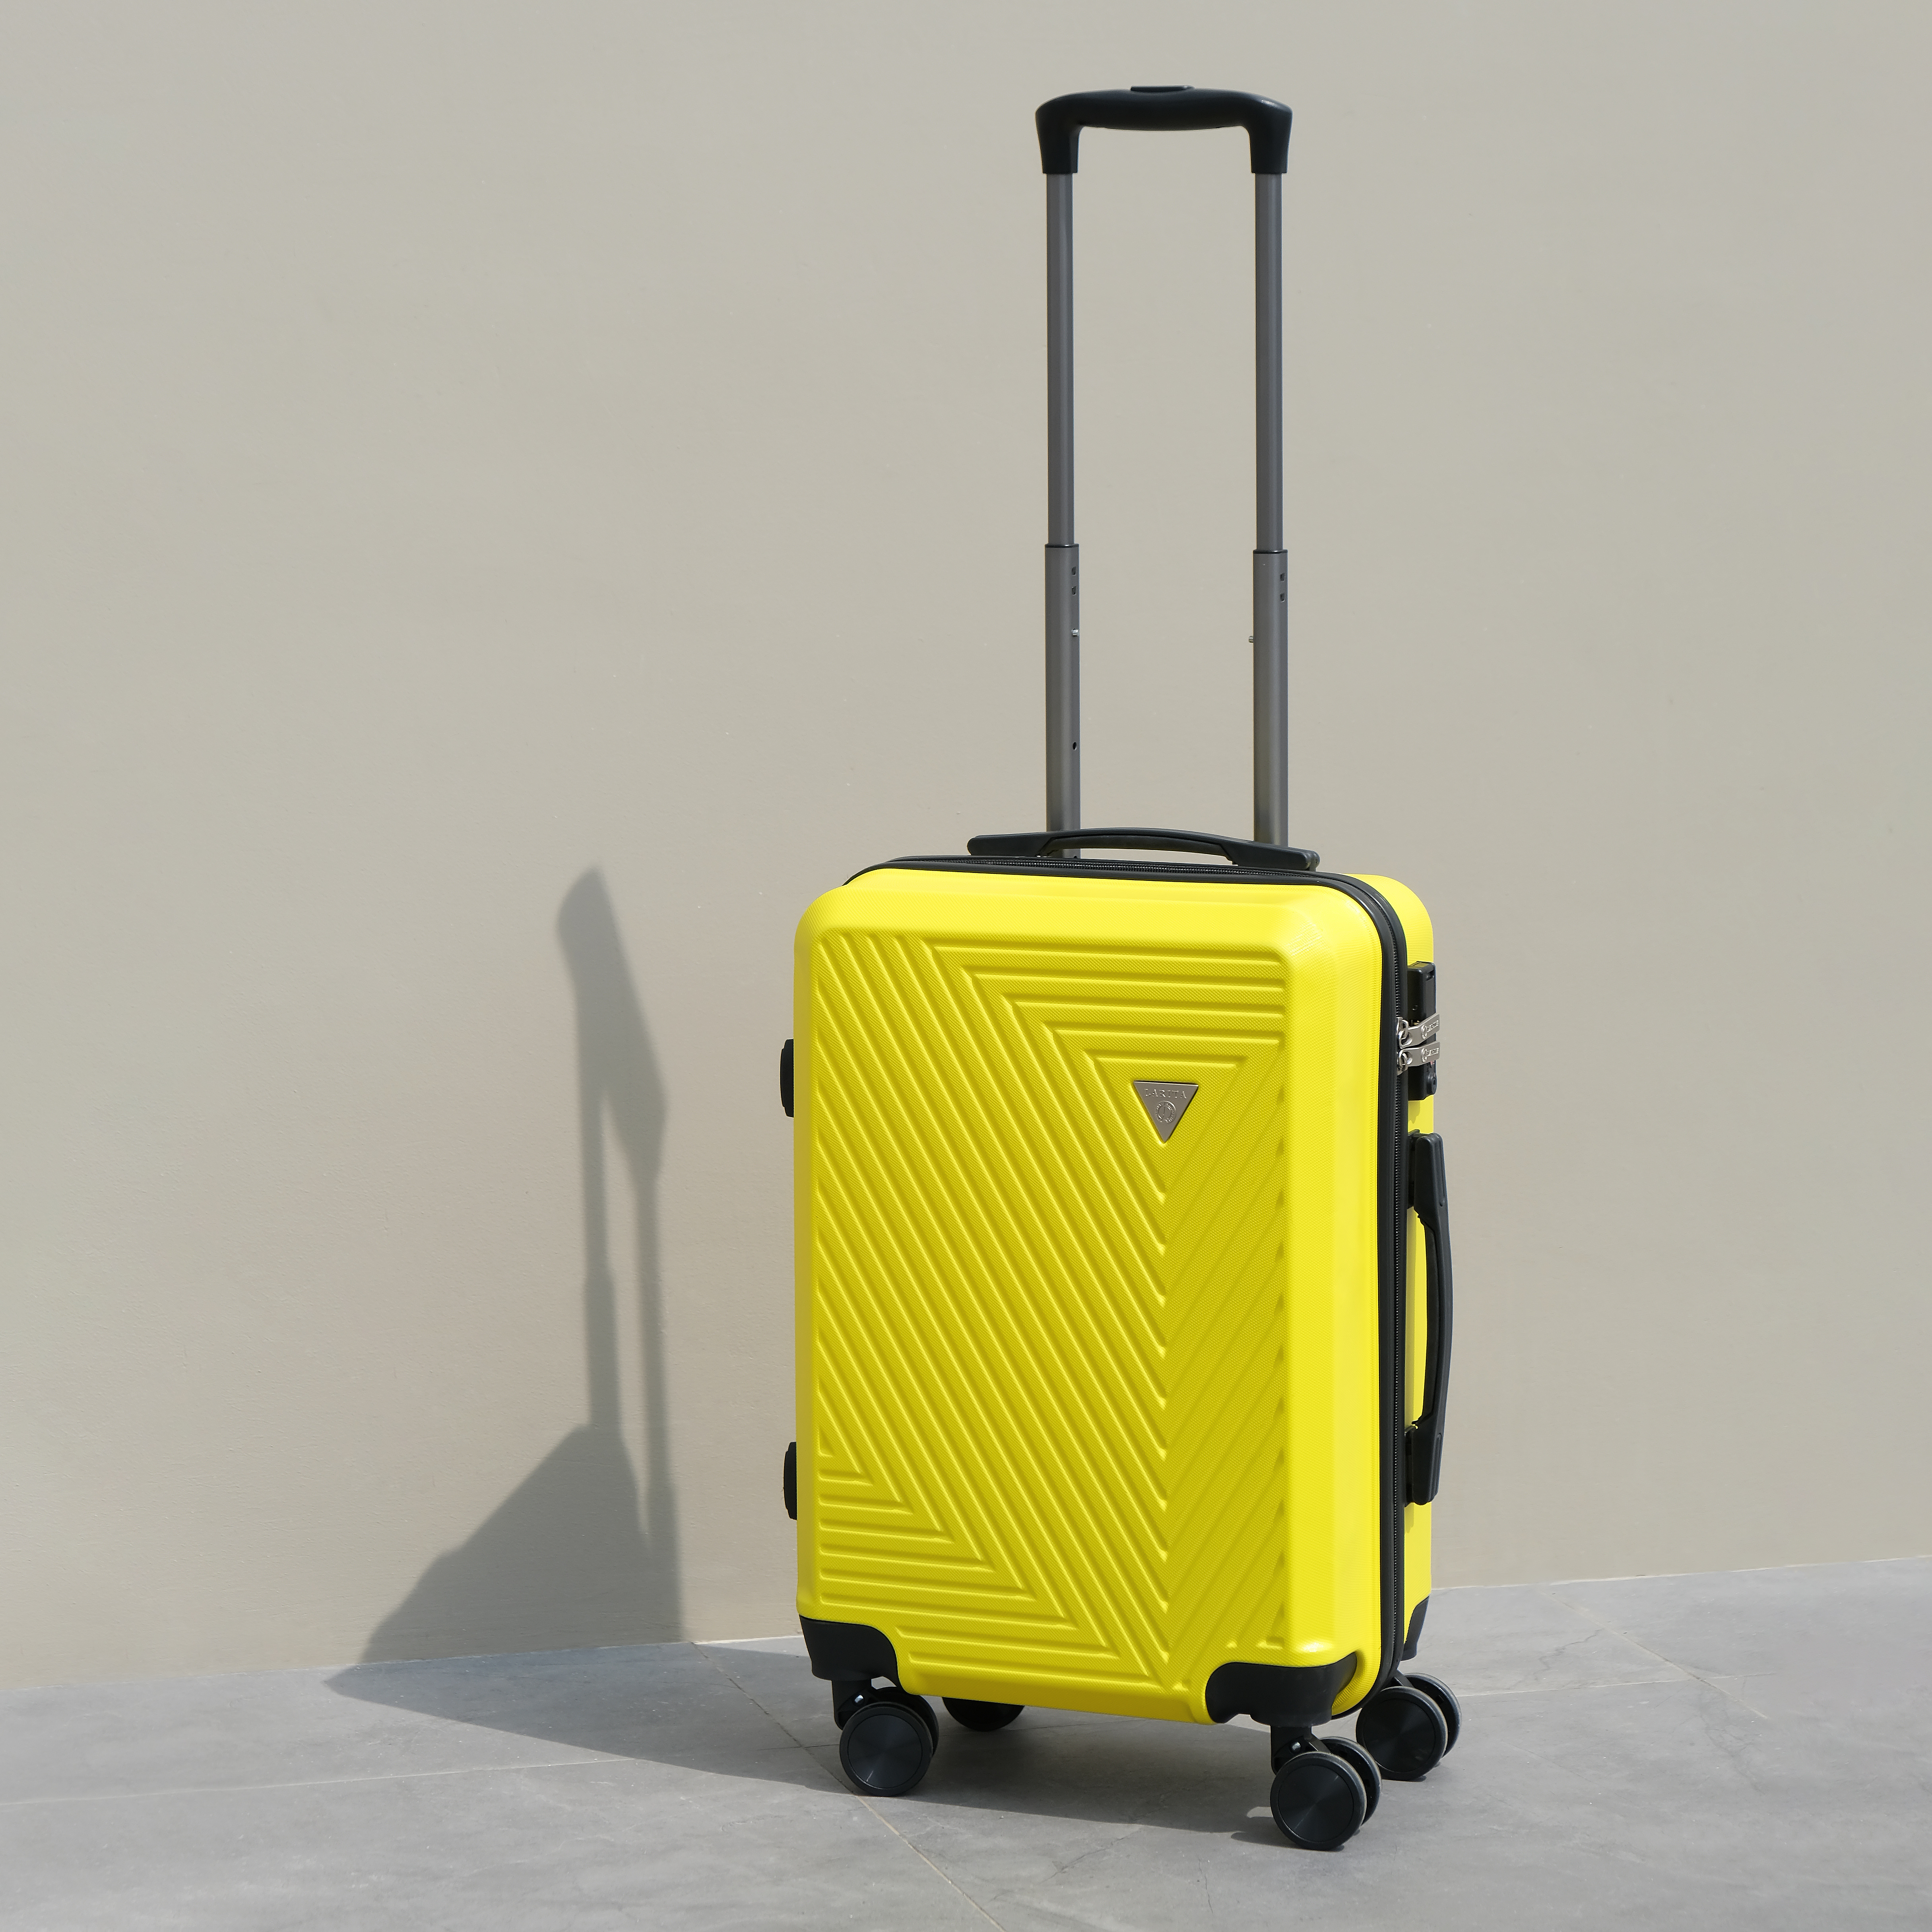 Vali kéo nhựa cứng Larita Tritan HF8012_28 L Yellow